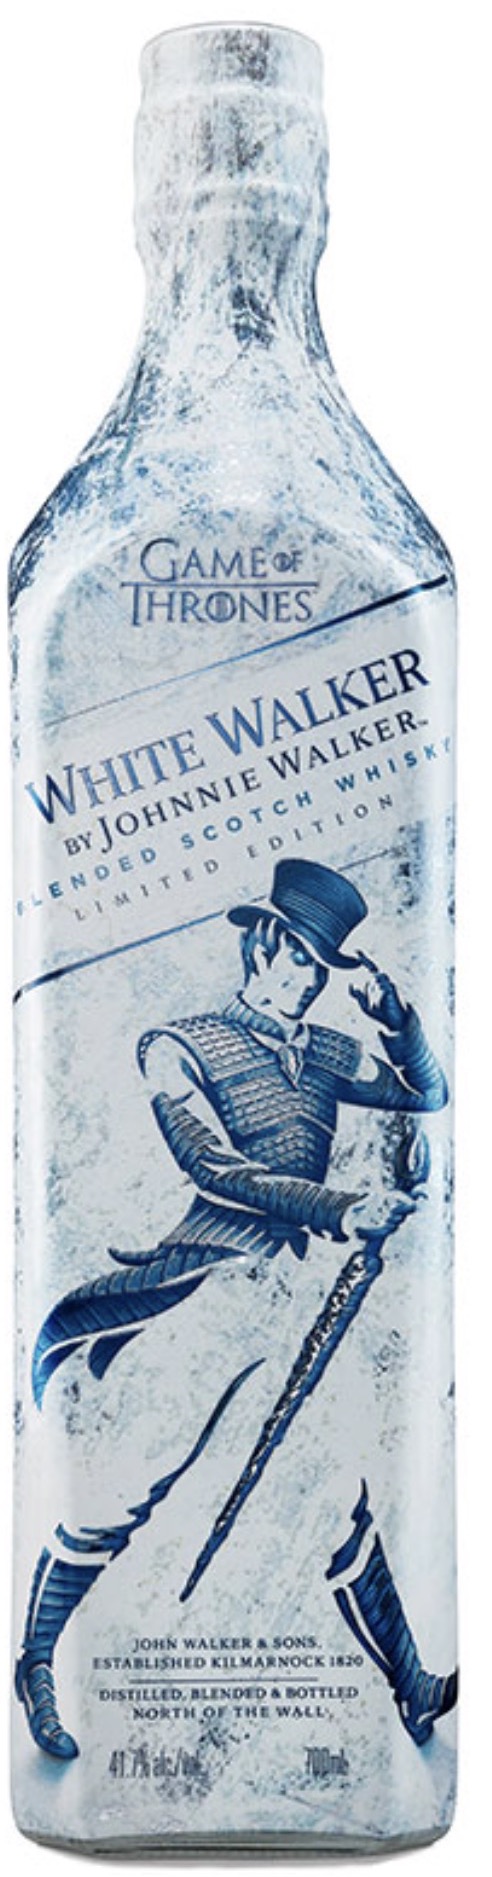 White Walker by Johnnie Walker Blended Scotch Whisky 41,7 % 0,7 l